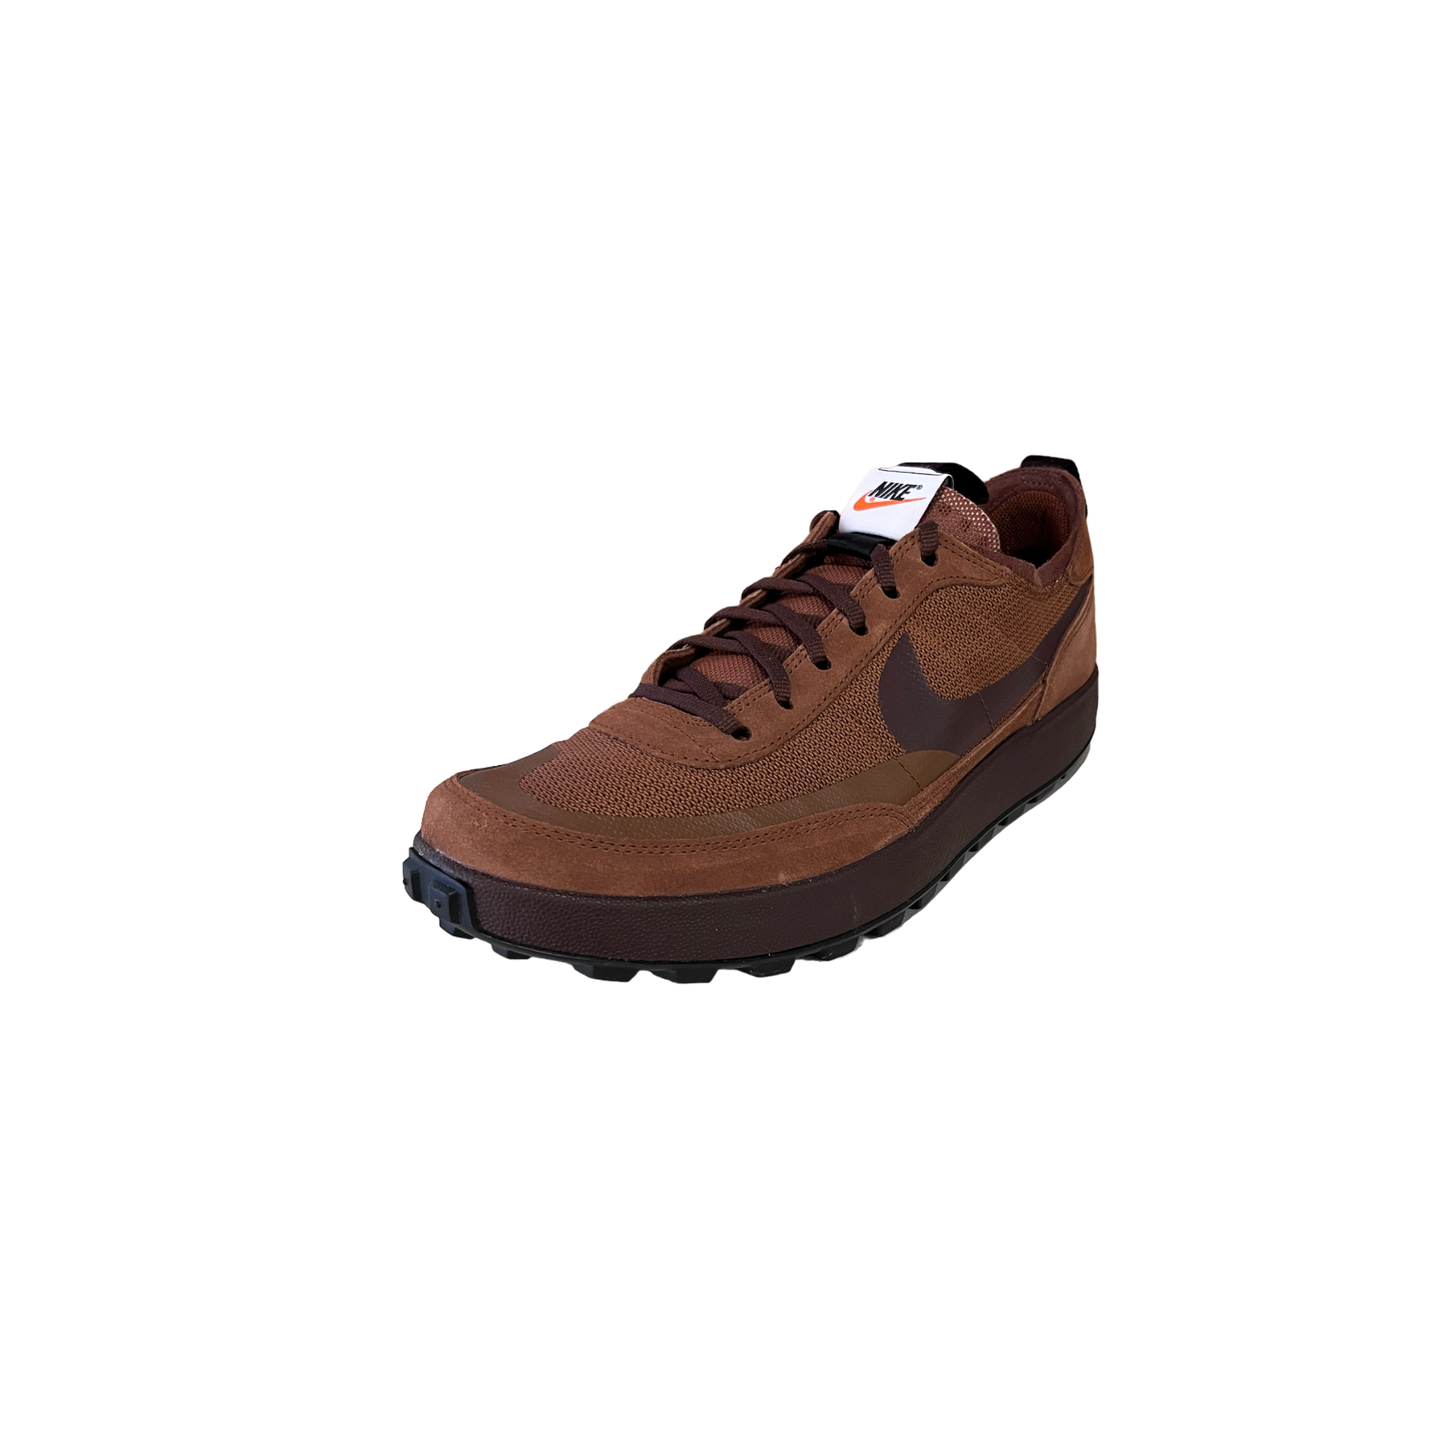 NikeCraft General Purpose Shoe Tom Sachs Field Brown